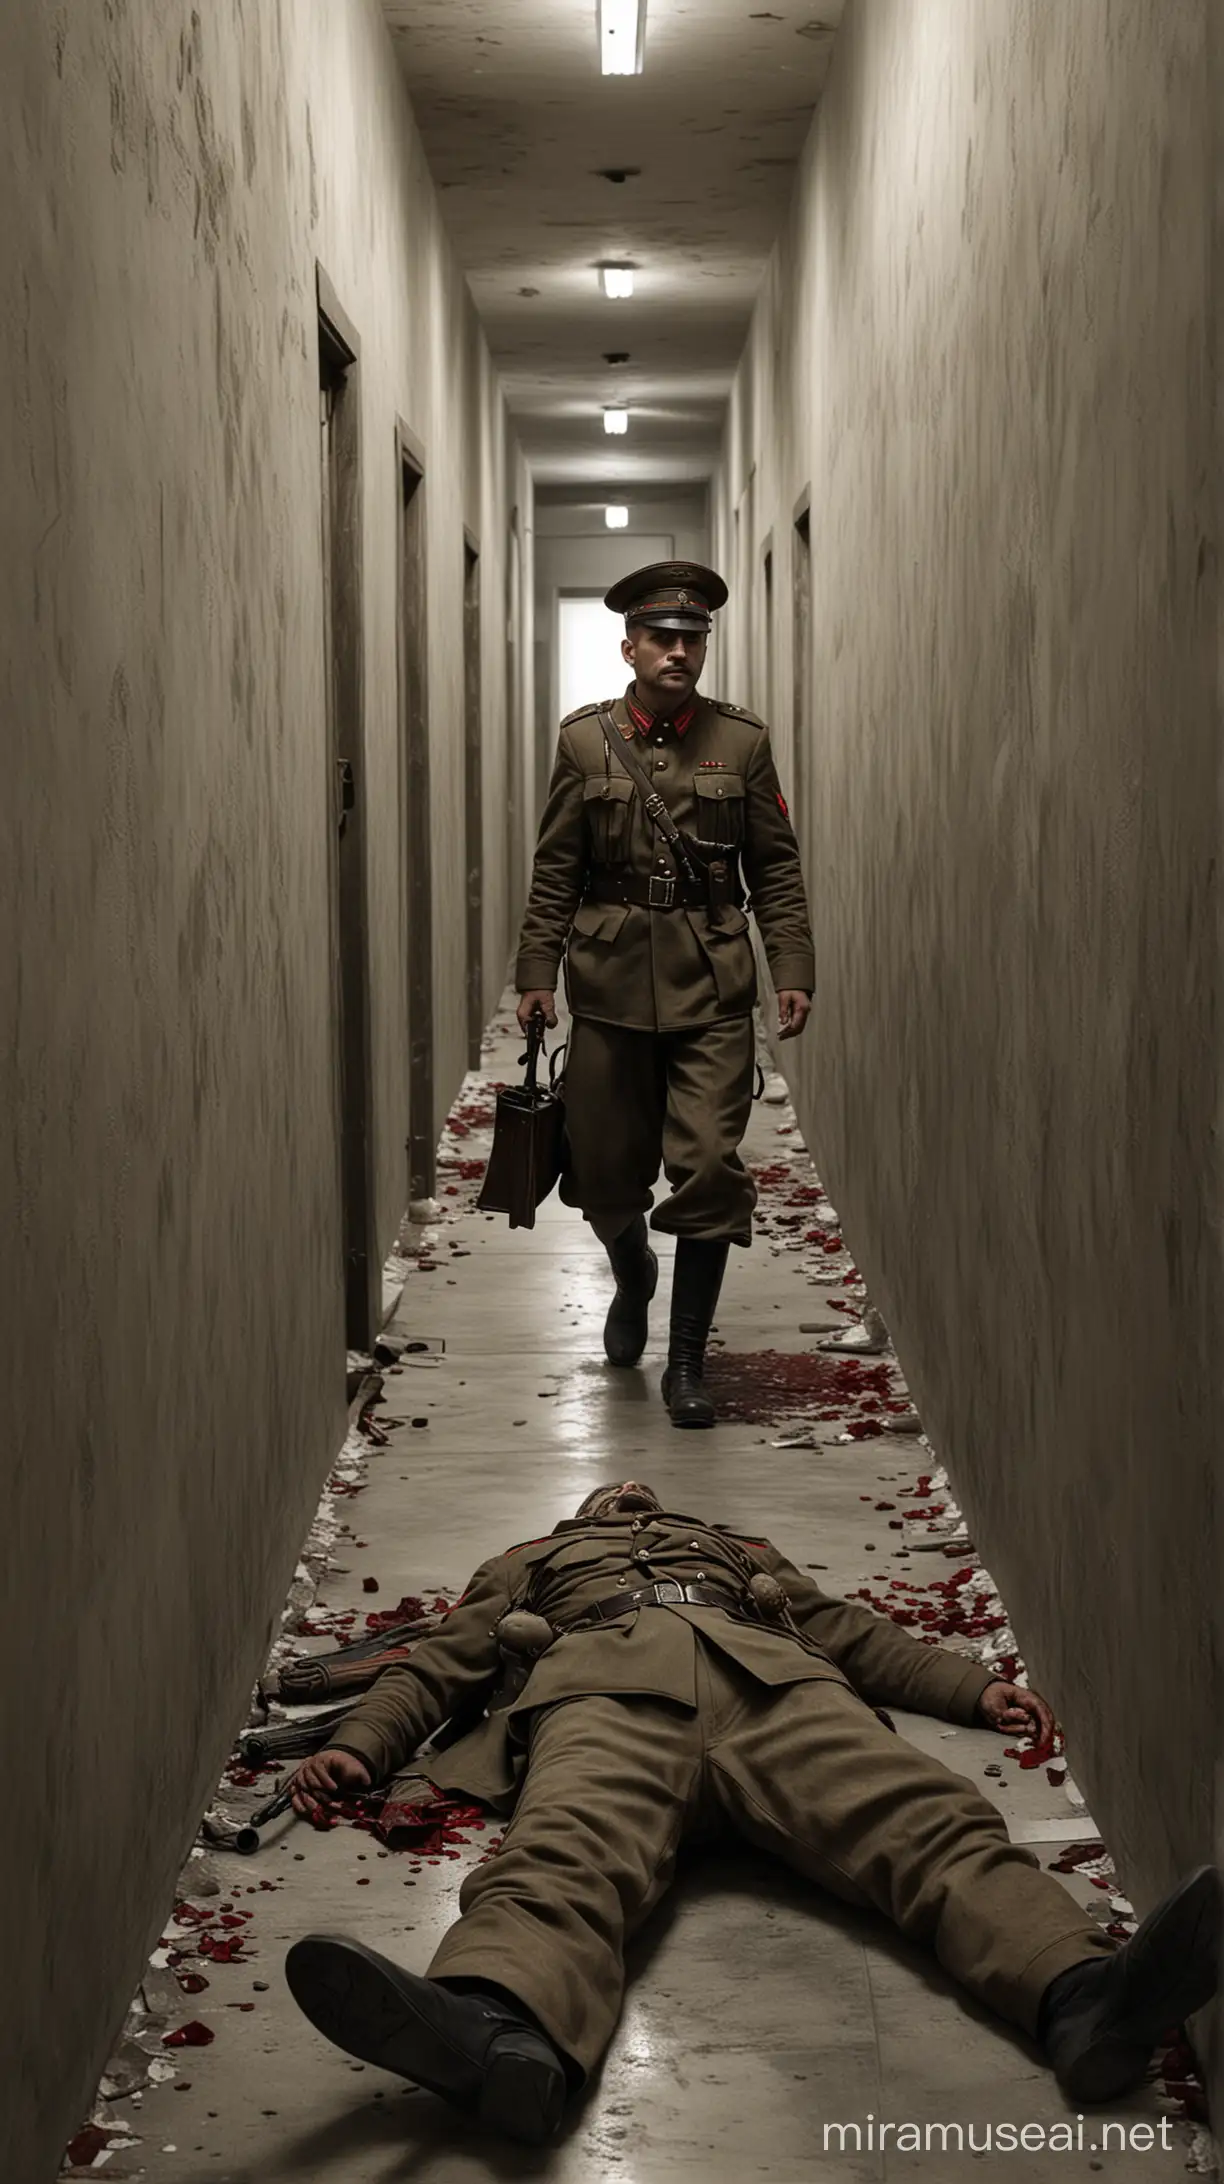 Dead soviet soldier in a corridor, shot by Stalin's people. Hyper realistic